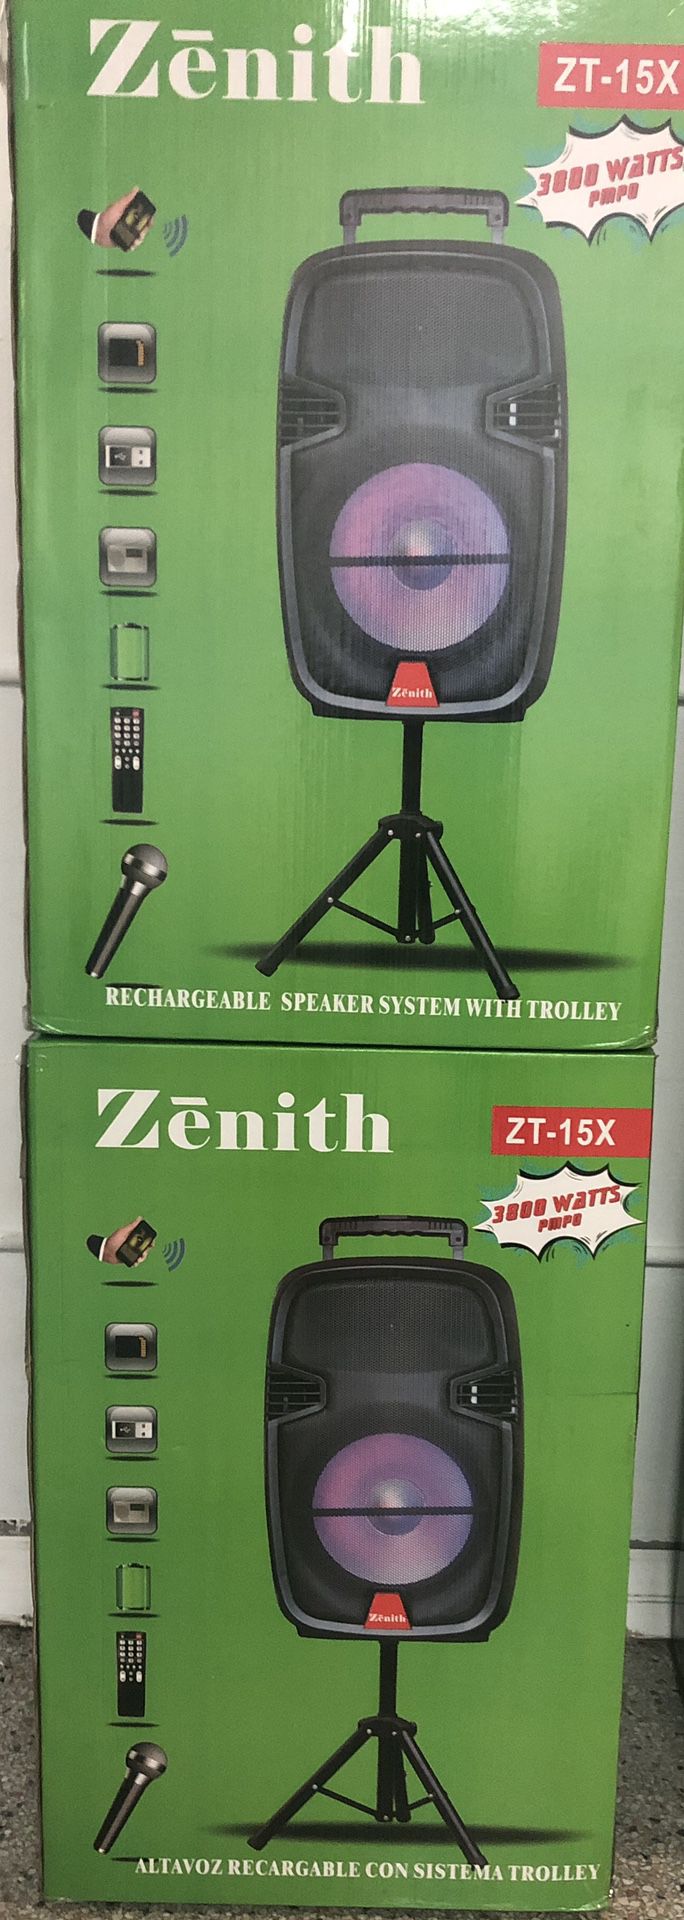 Zenith speakers karaoke